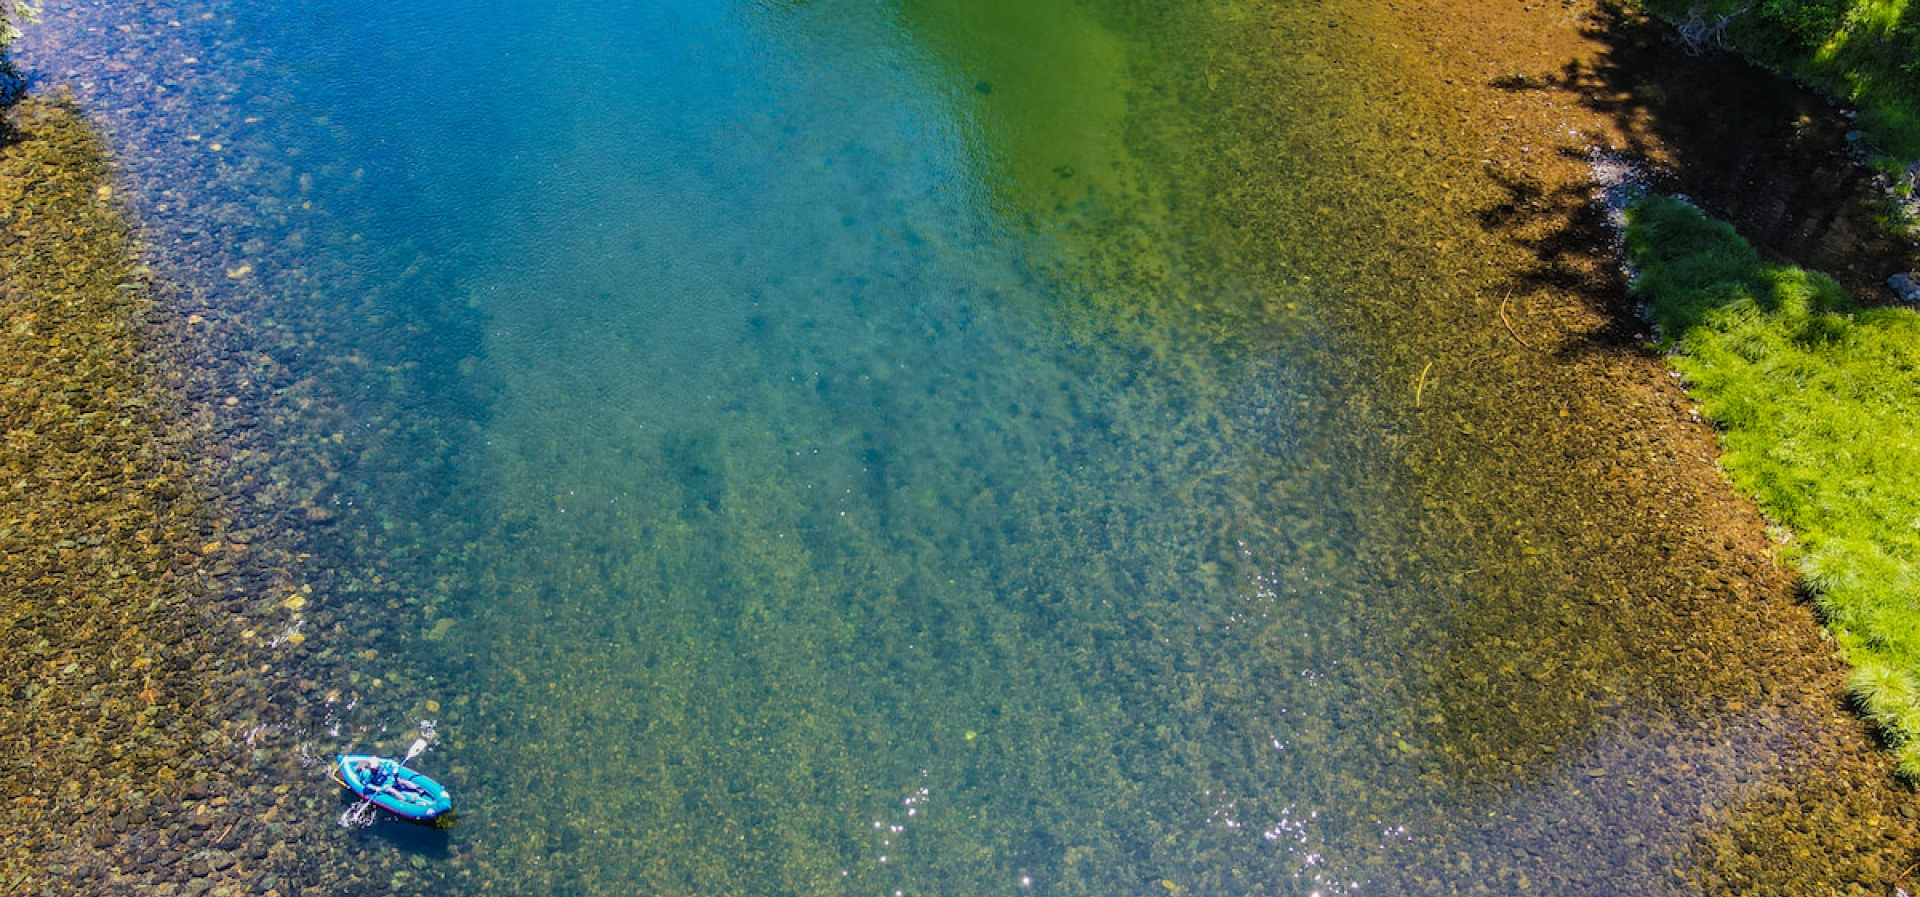 North Umpqua river kayaker in clear water